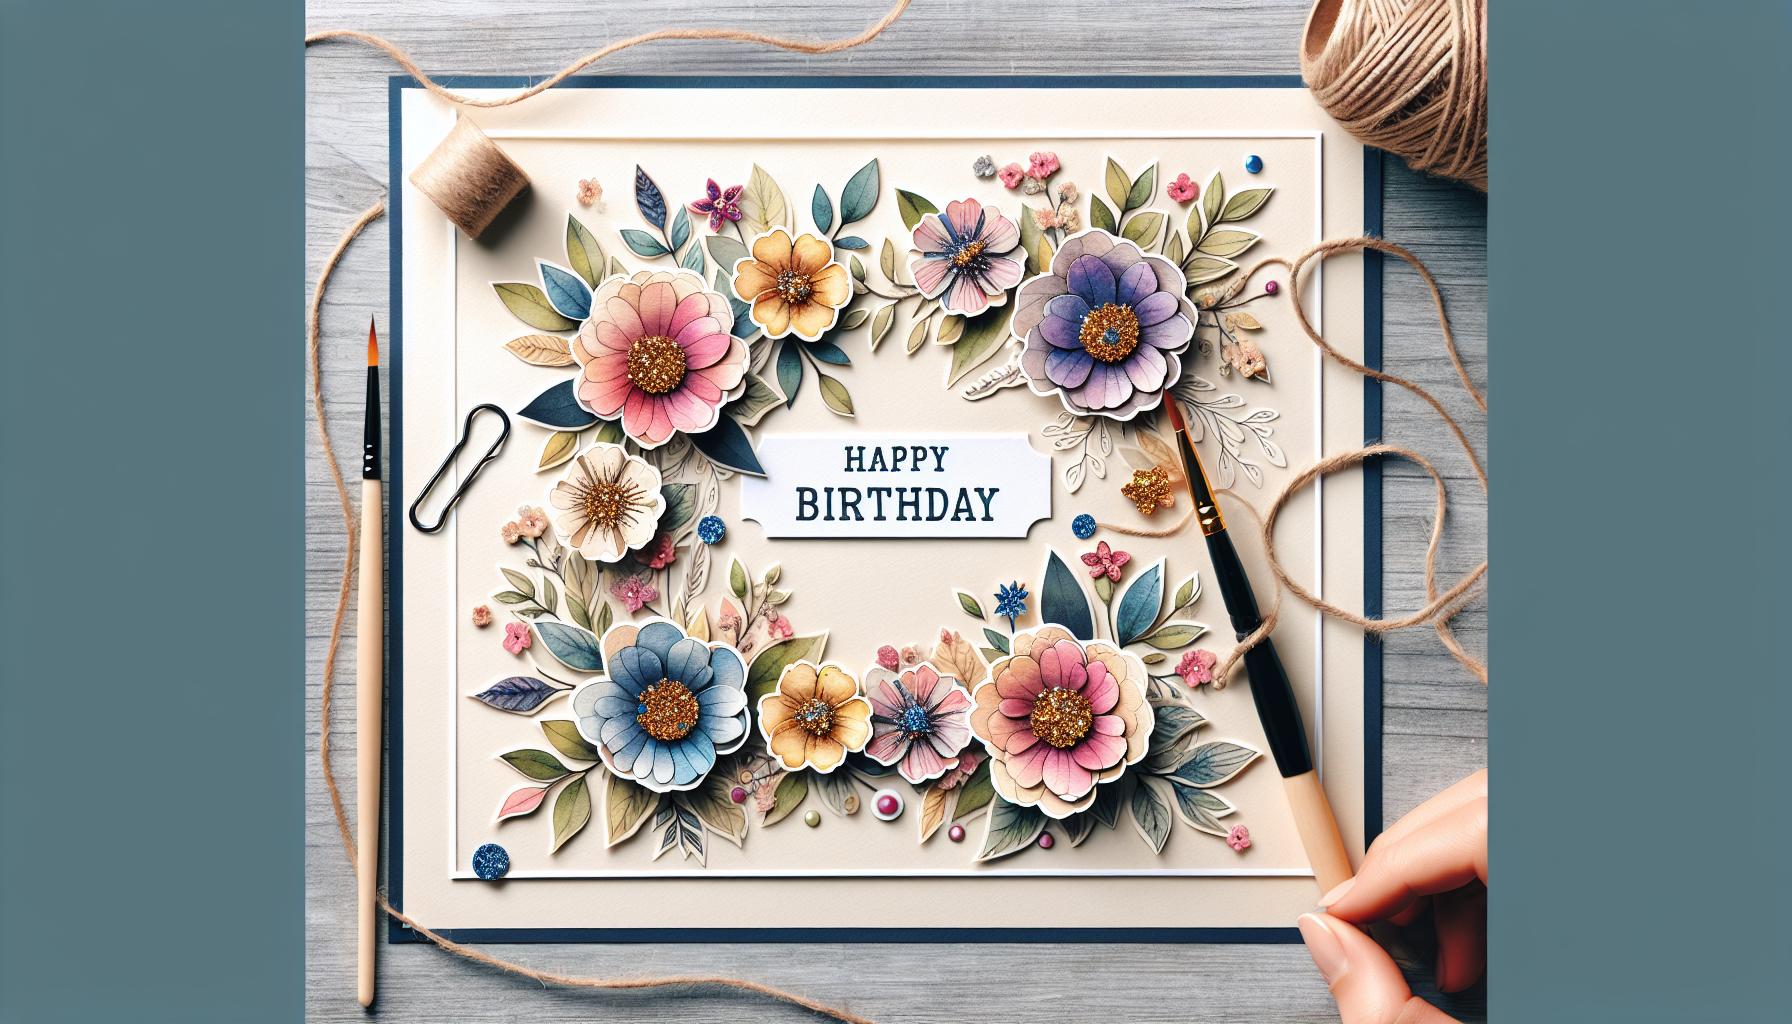 Creative & Fun Ideas for Making Heartfelt Birthday Cards for Grandma